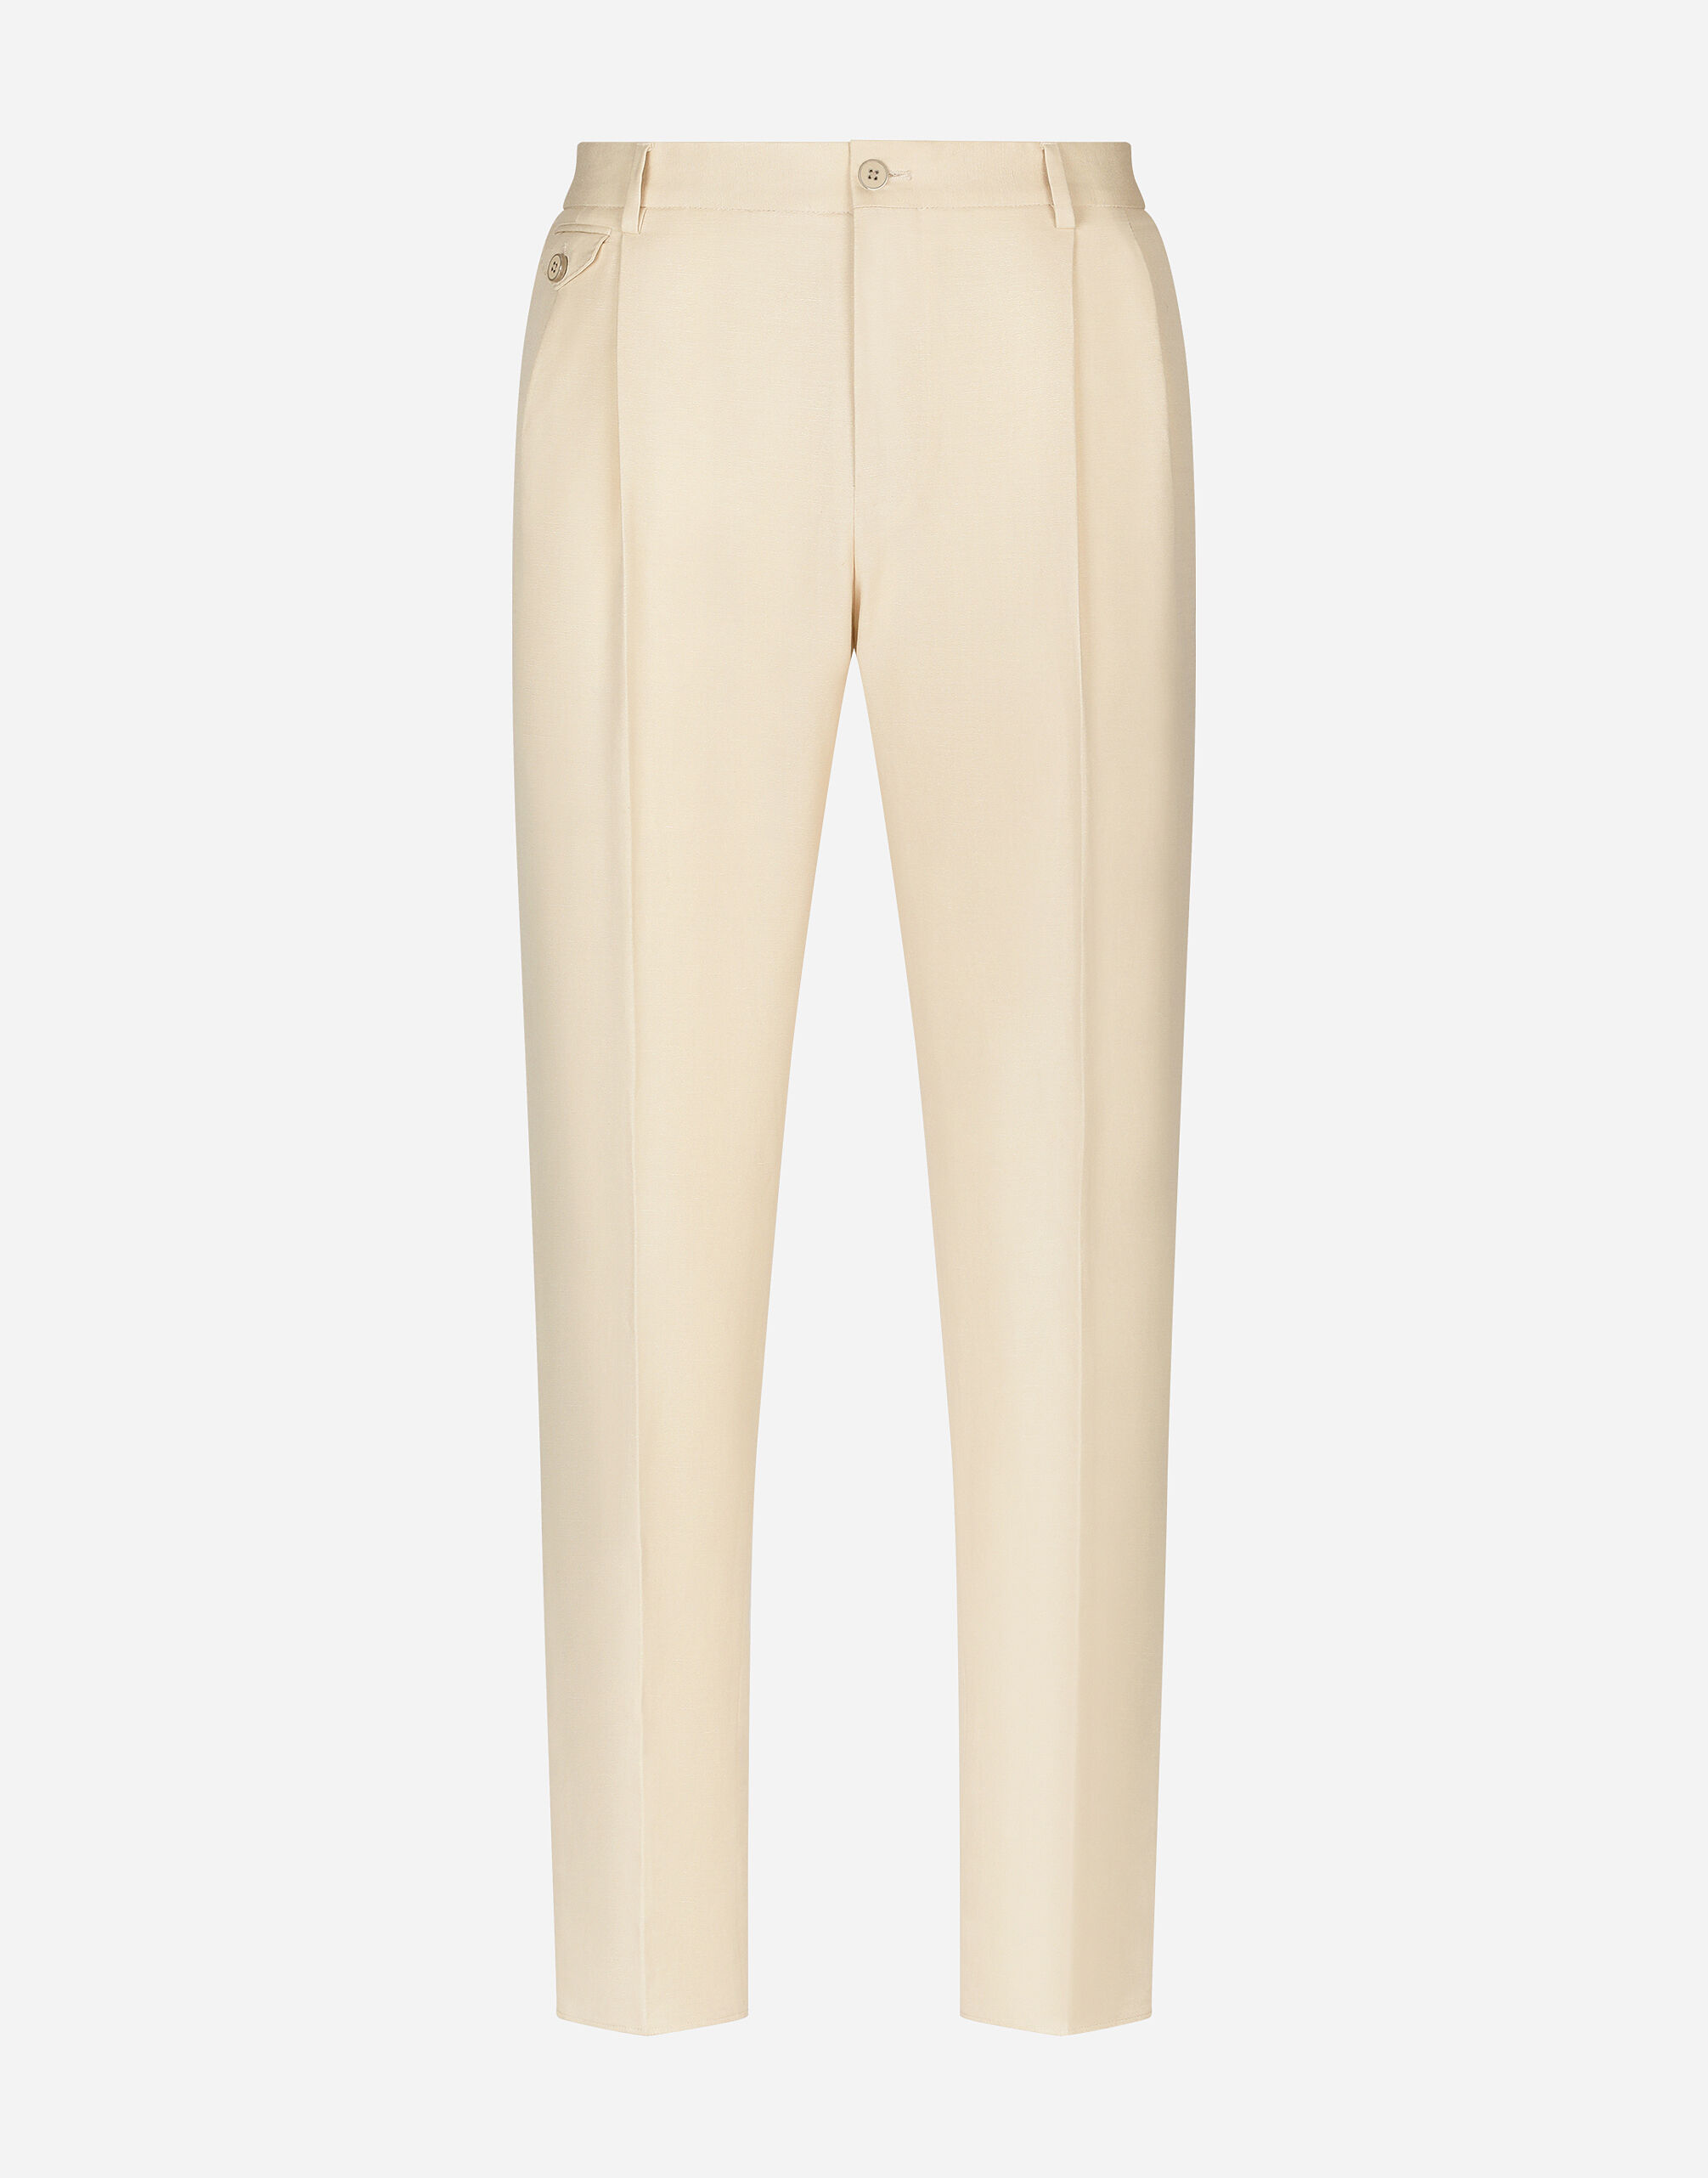 Dolce & Gabbana Linen, cotton and silk pants Print BM2274AR700